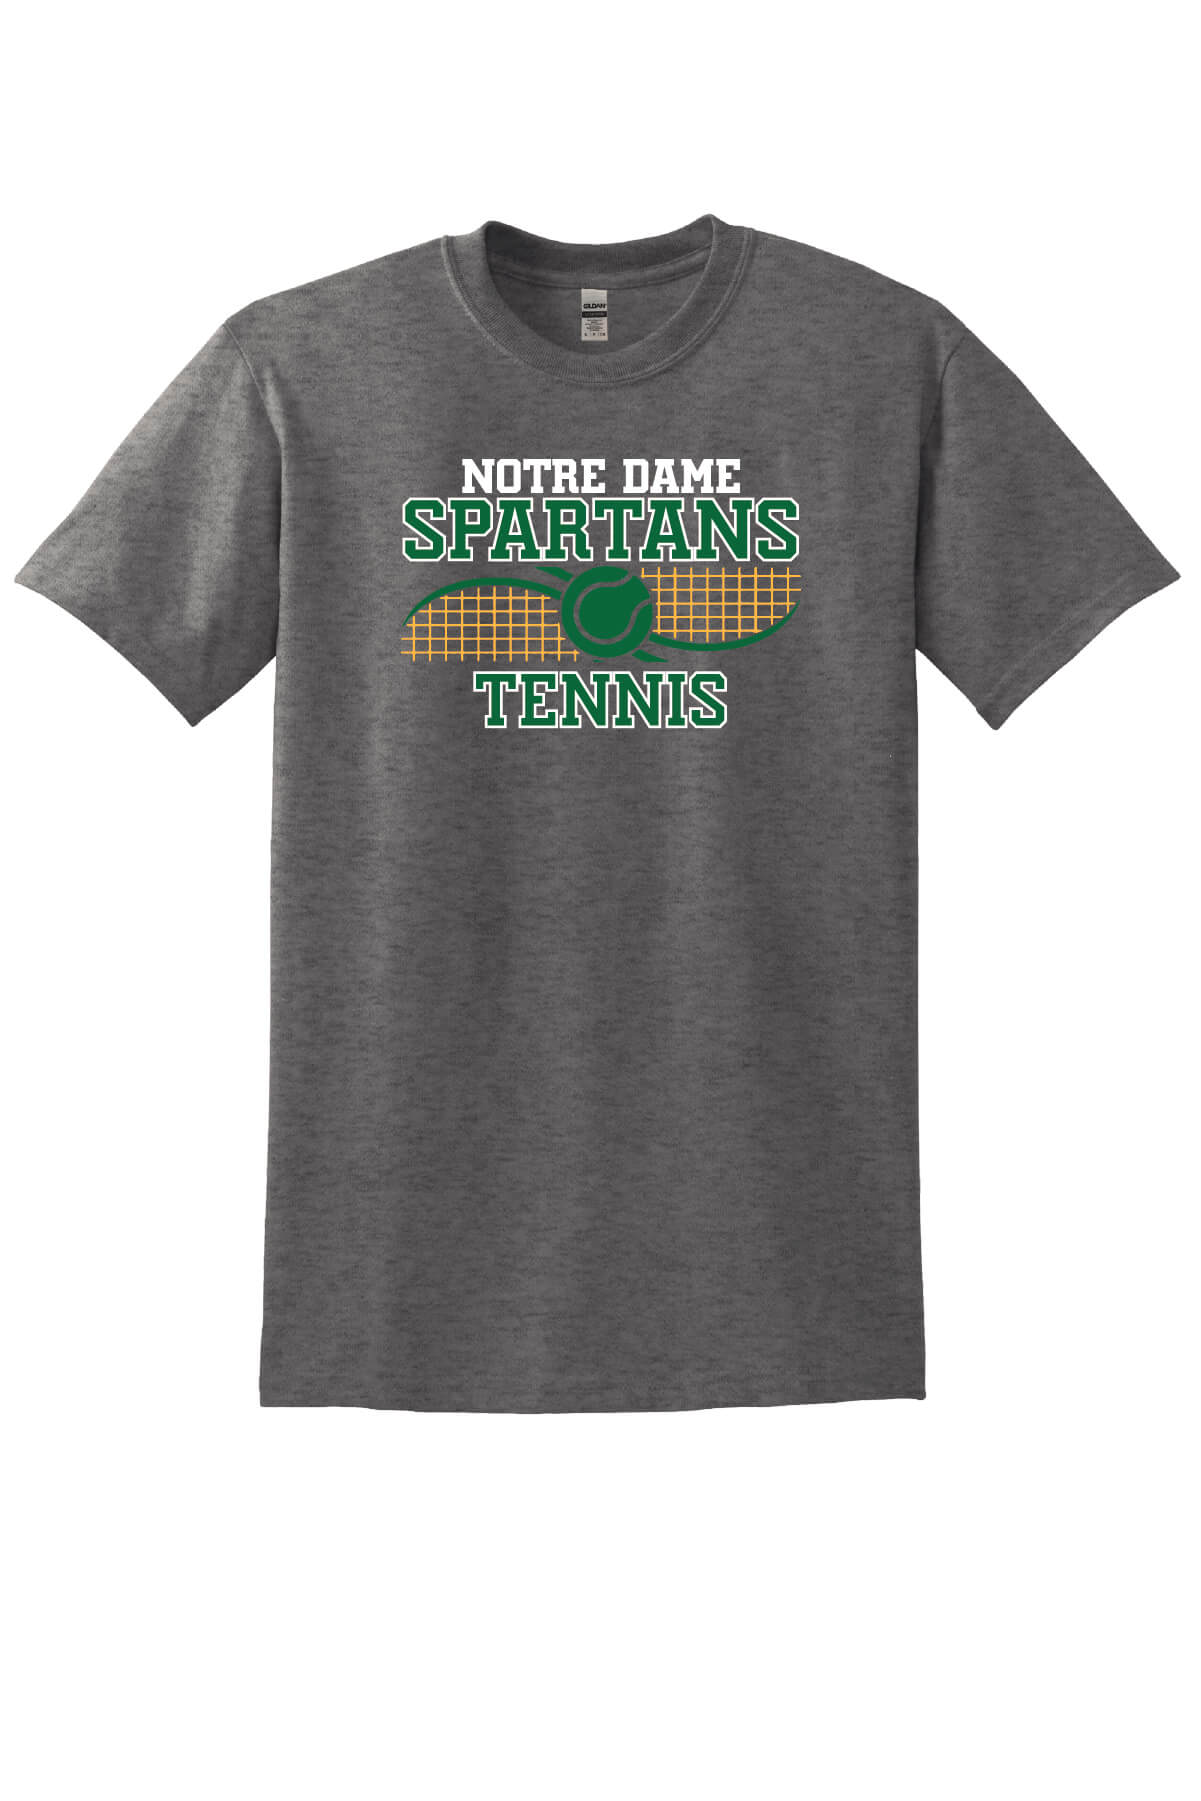 Notre Dame Spartans Short Sleeve T-Shirt gray